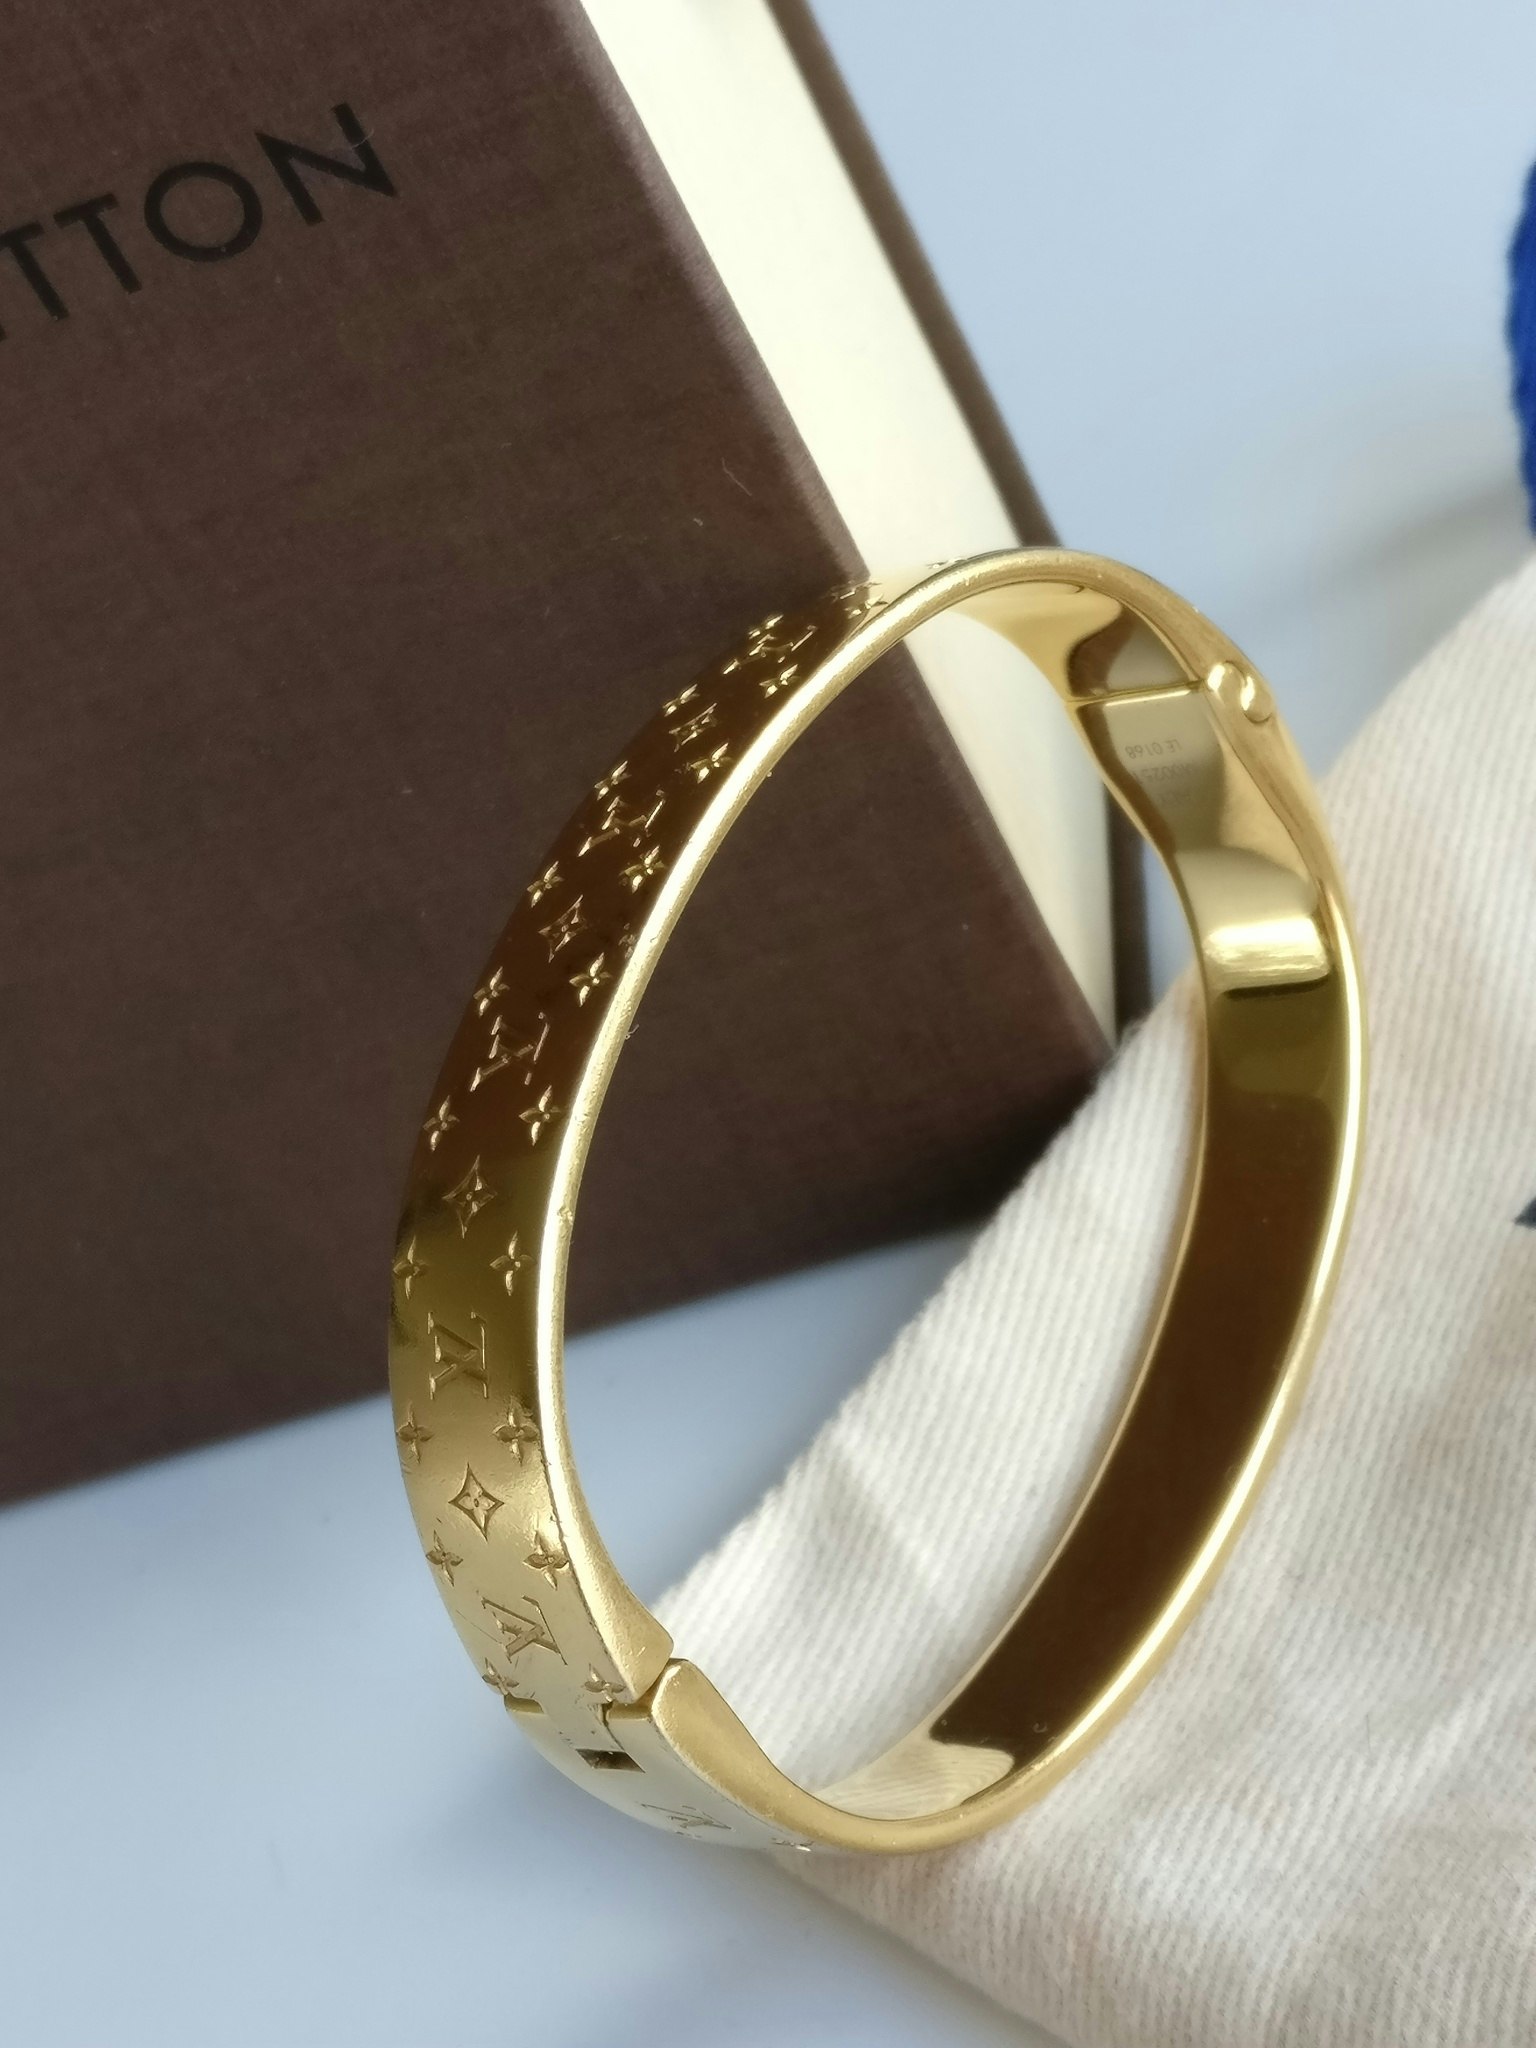 Louis Vuitton Nanogram cuff bracelet - Good or Bag